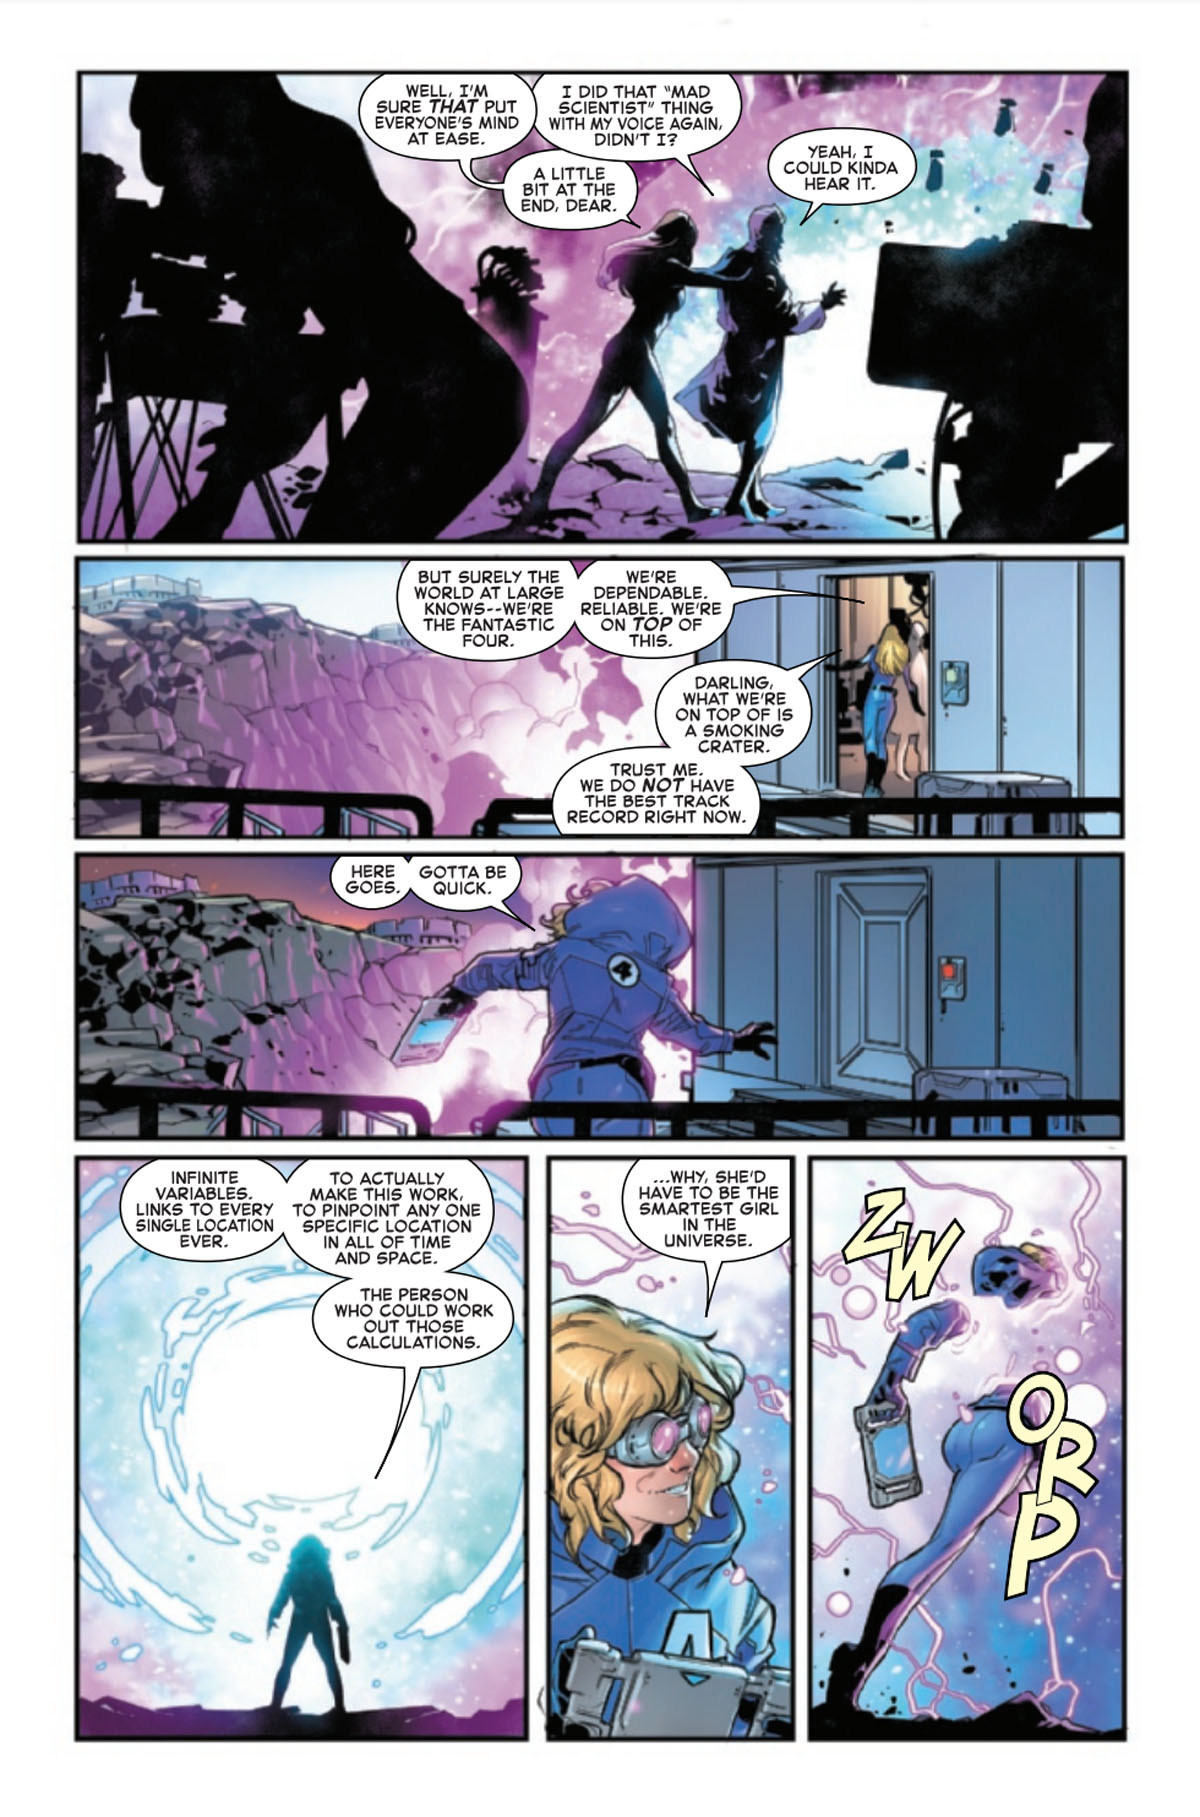 Fantastic Four #26 page 2